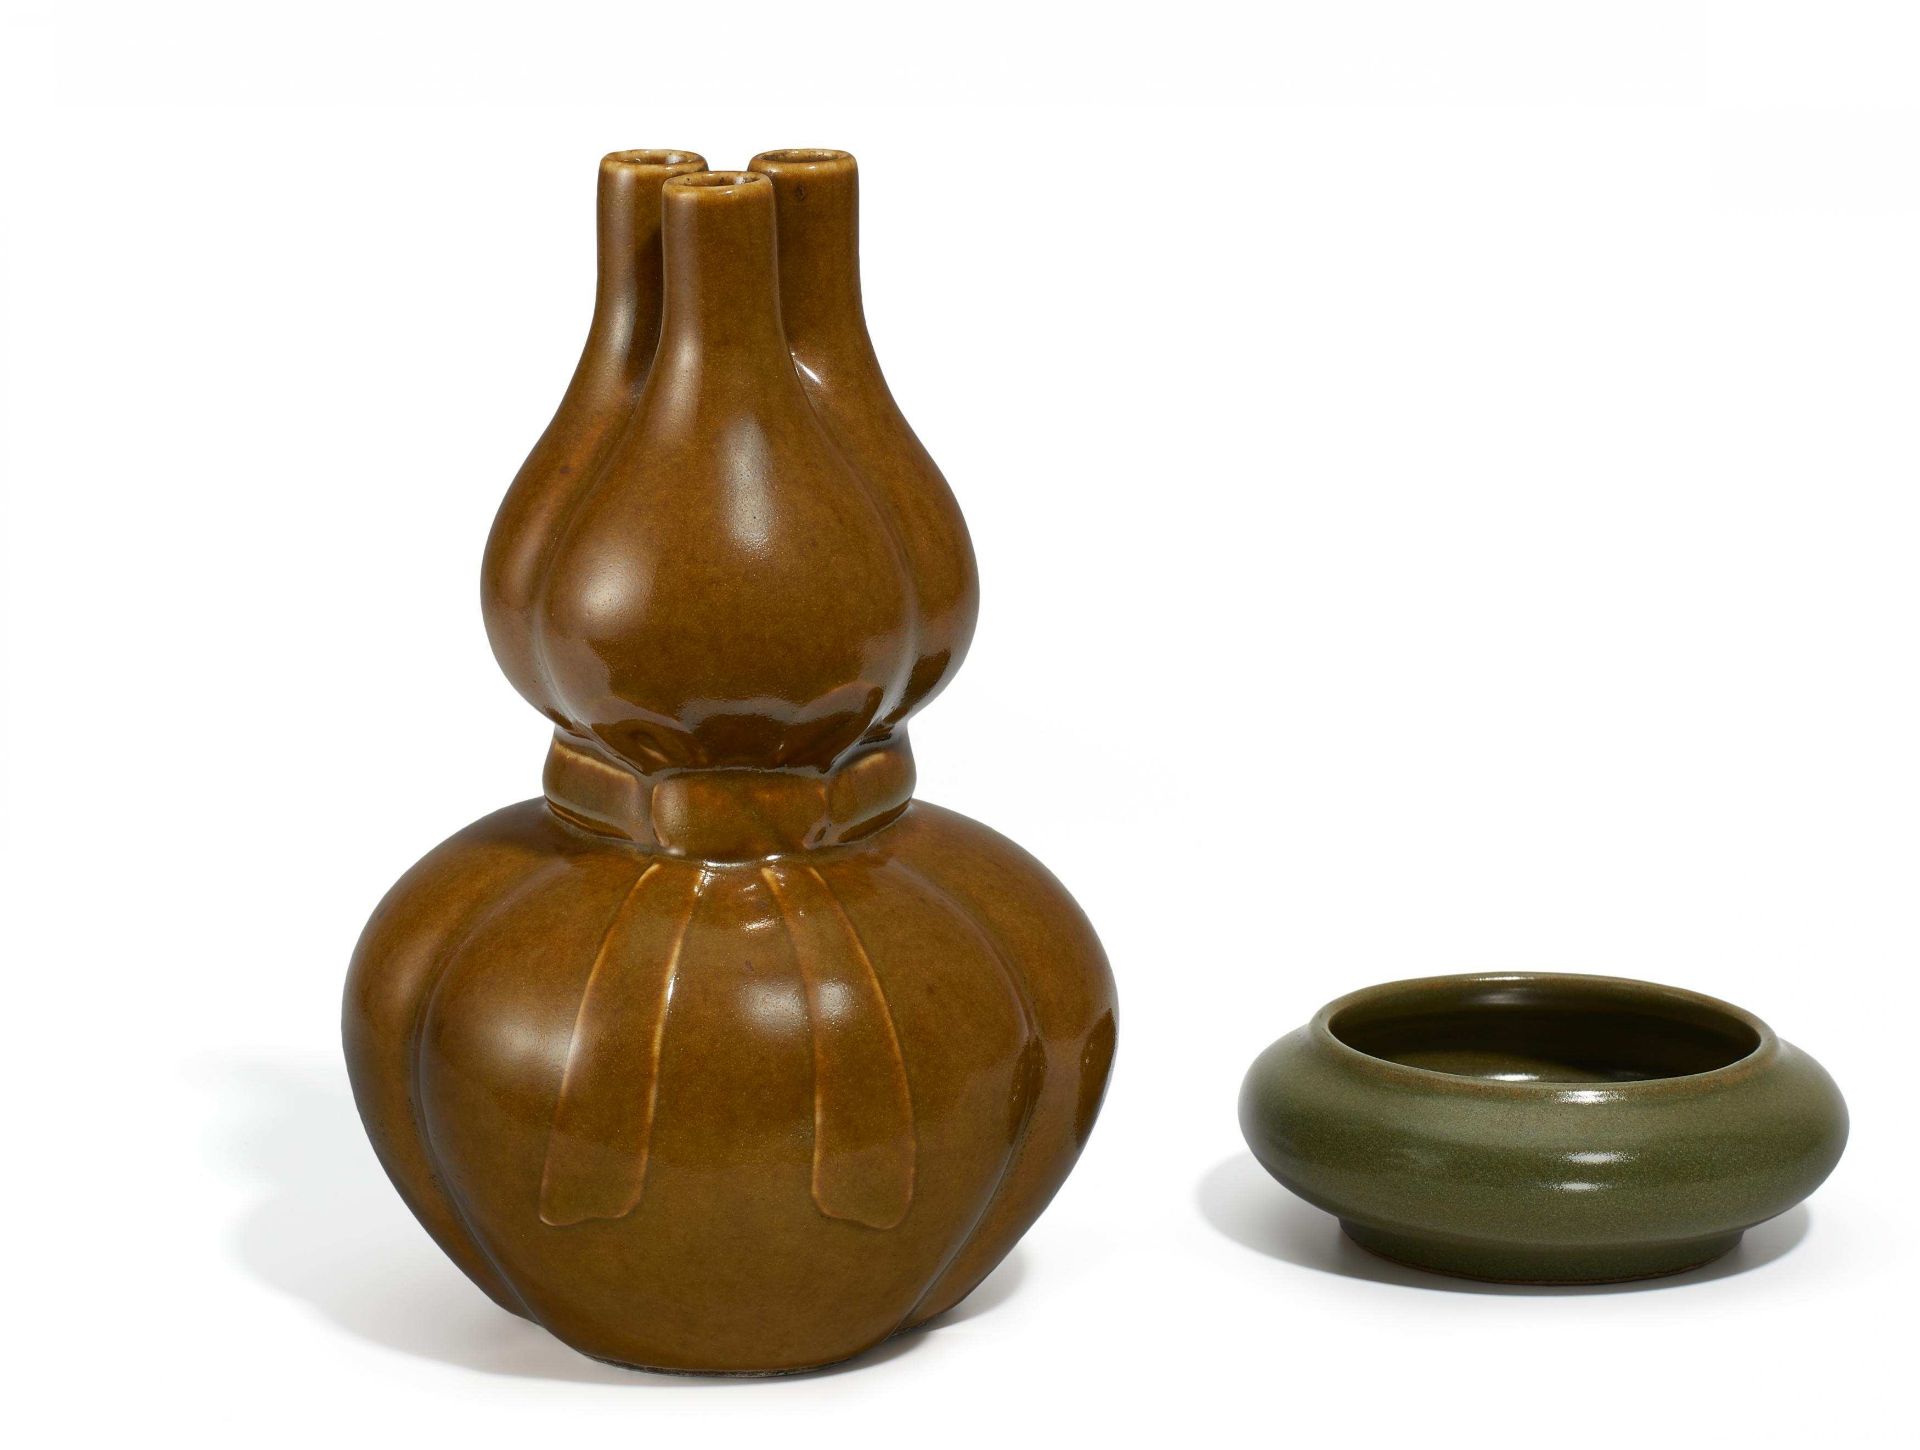 GOURD VASE. China. Qing dynasty. 19th c. Porcelain, yellowish green tea dust glaze. Gourd vase